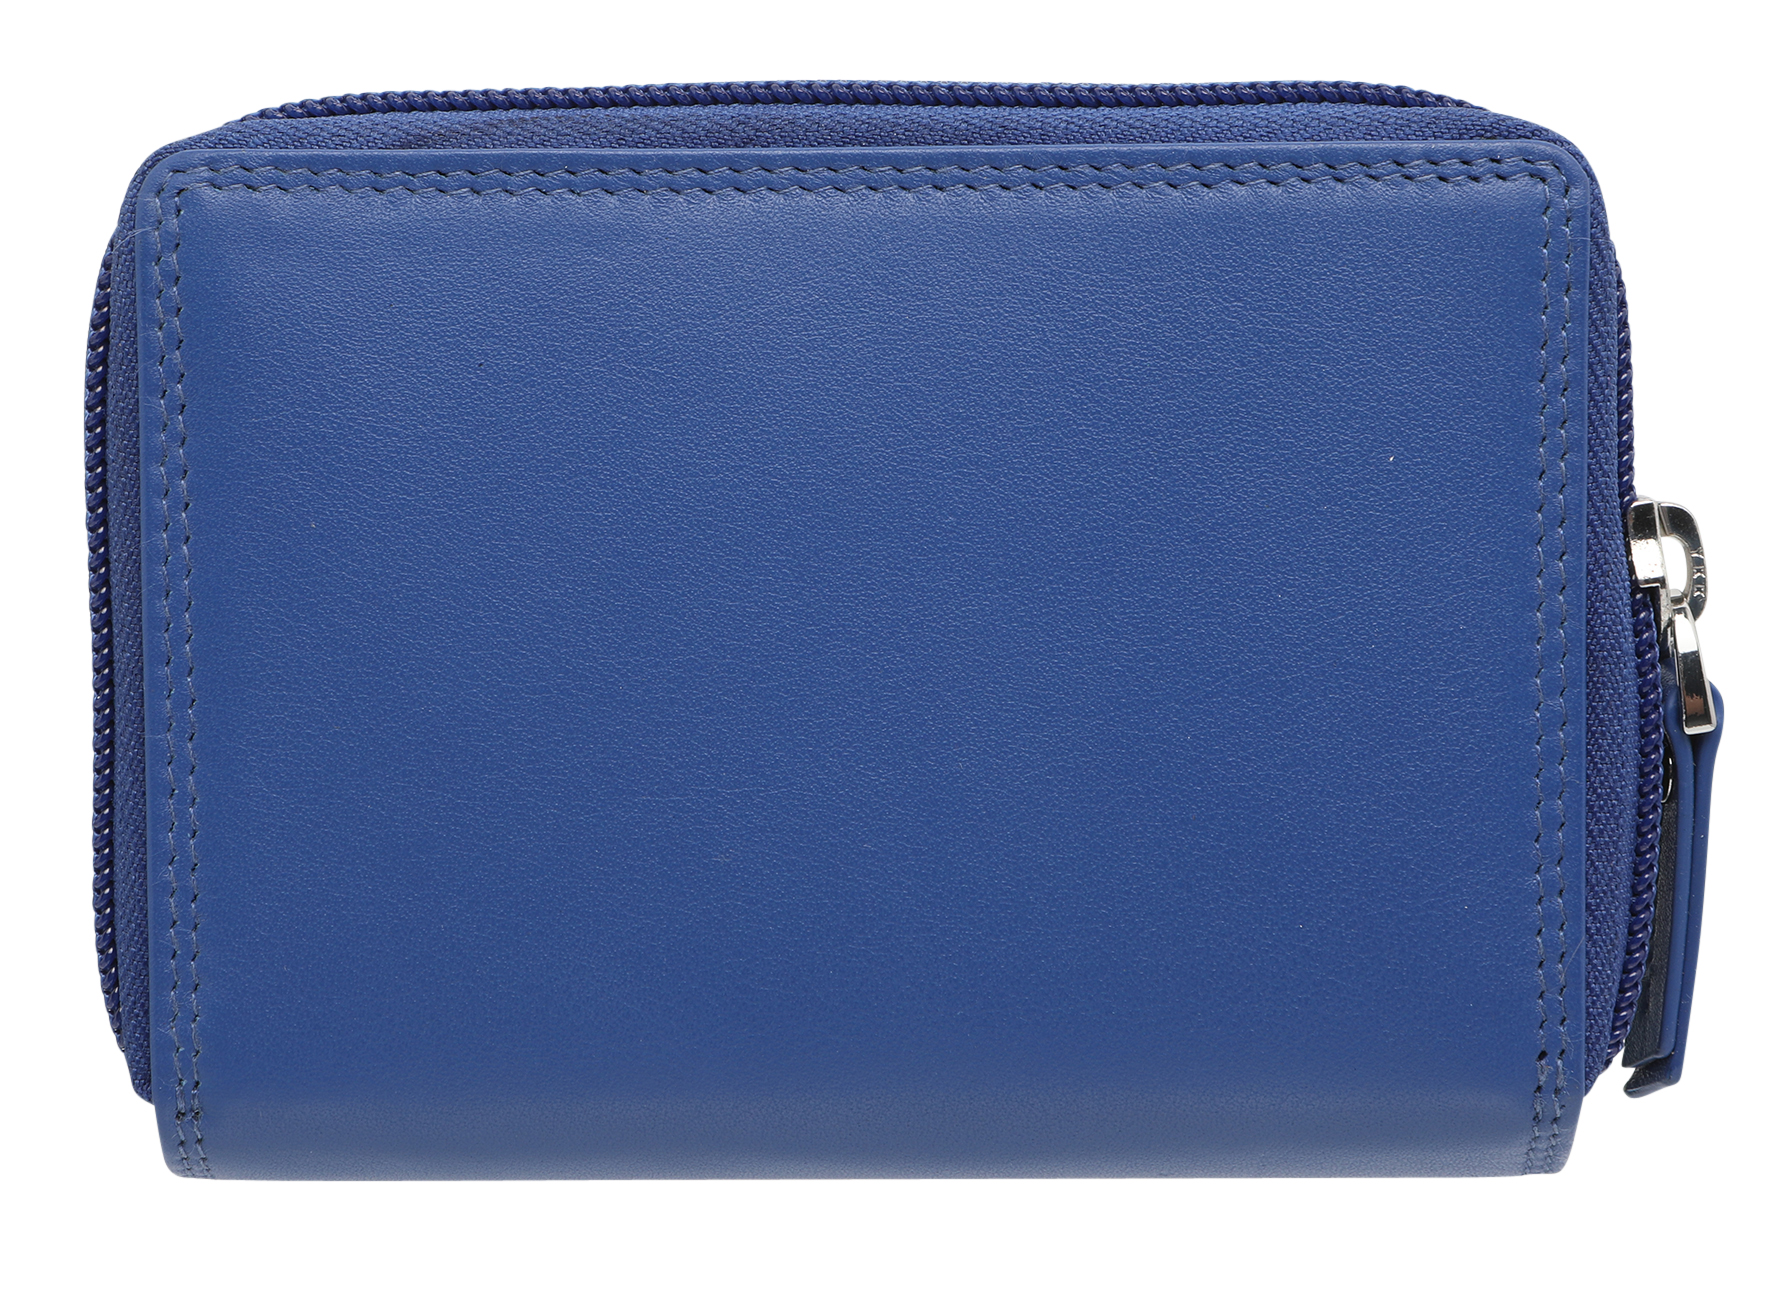 Leather Cobalt & Multi Coloured Wallet 7328CMI - Modapelle Direct